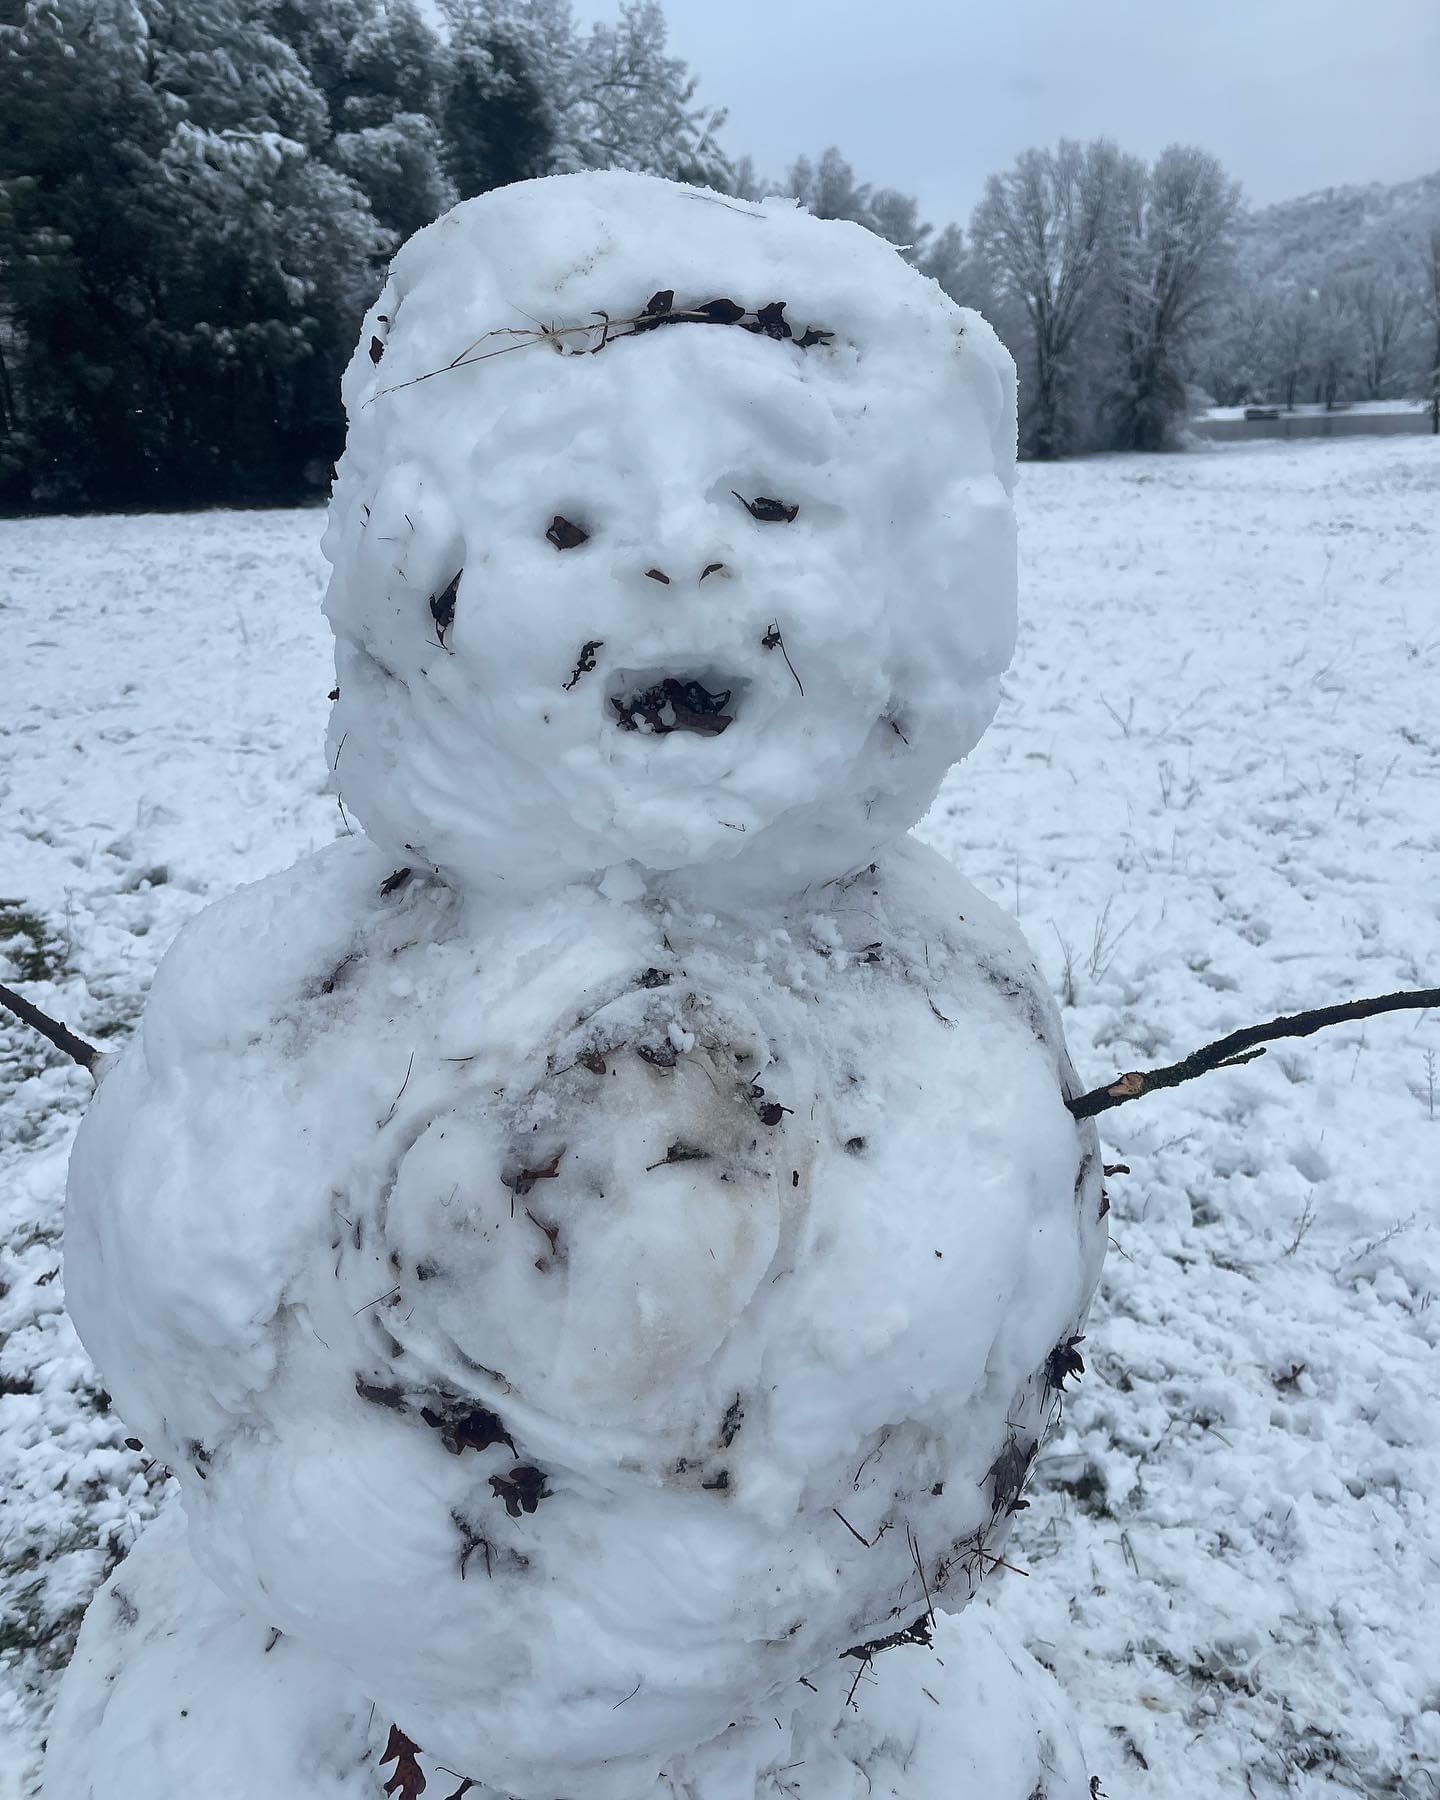 Rare snowfall in California. Friend set out to make a “realistic” snowman…